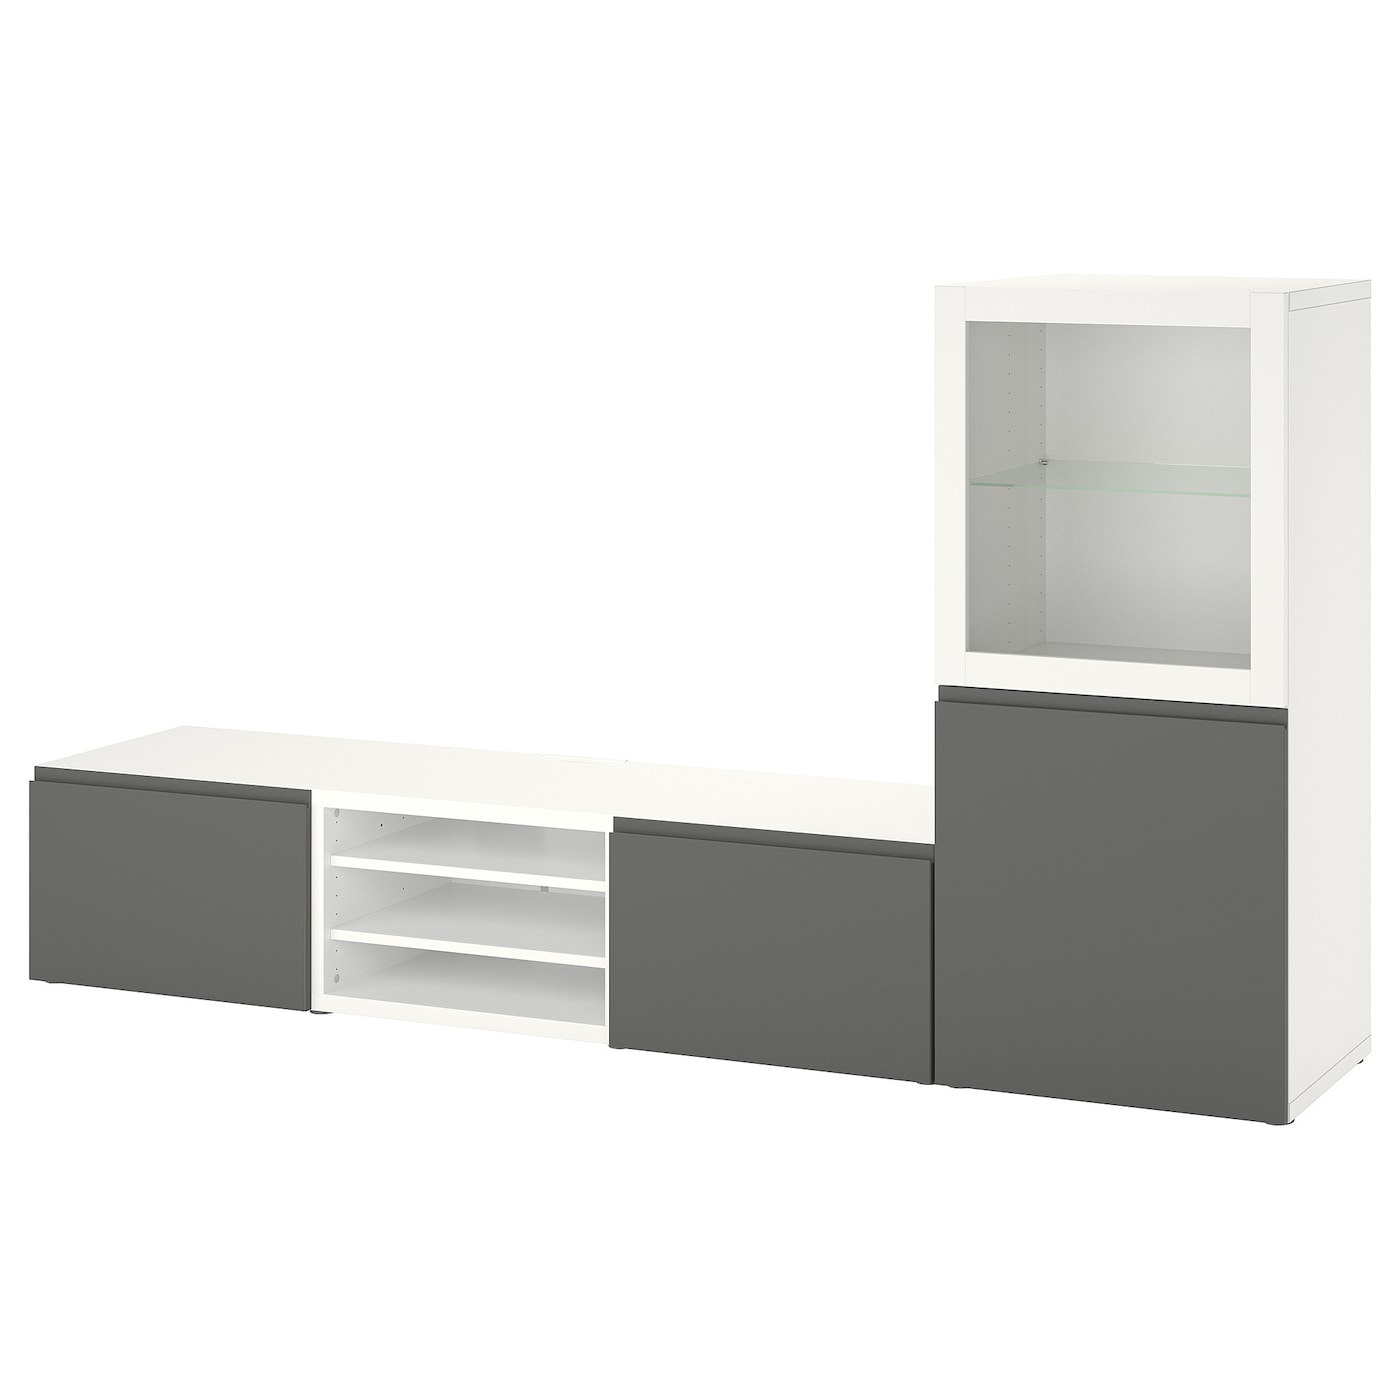 Комбинация для хранения ТВ - IKEA BESTÅ/BESTA, 129x42x240см, серый/белый, БЕСТО ИКЕА